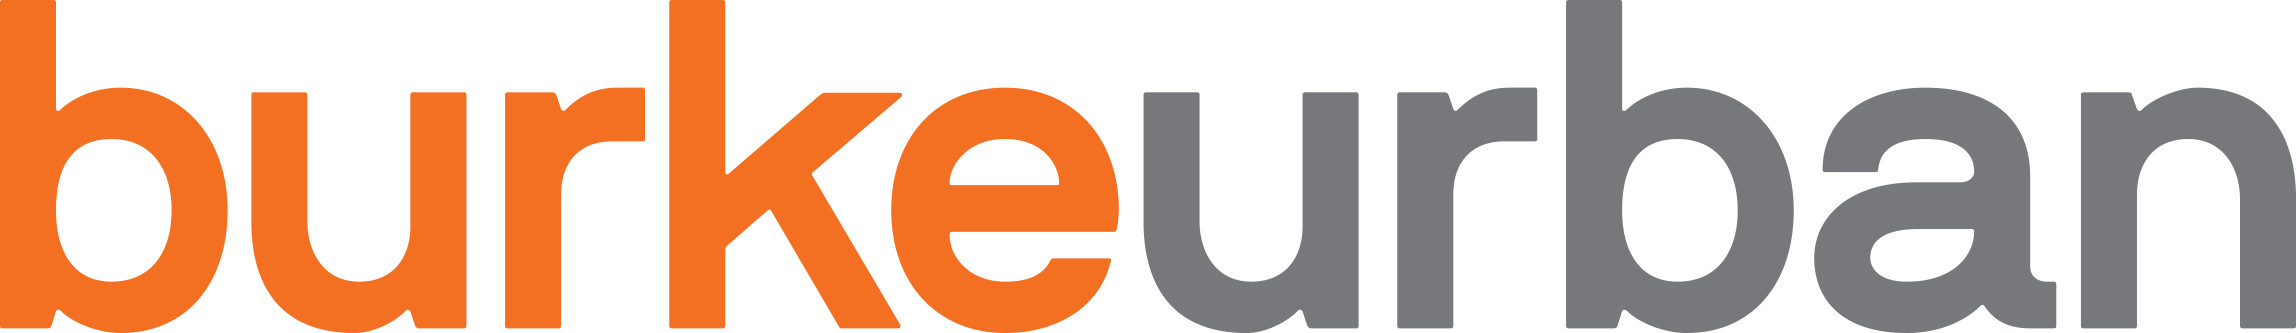 Burke Urban Logo